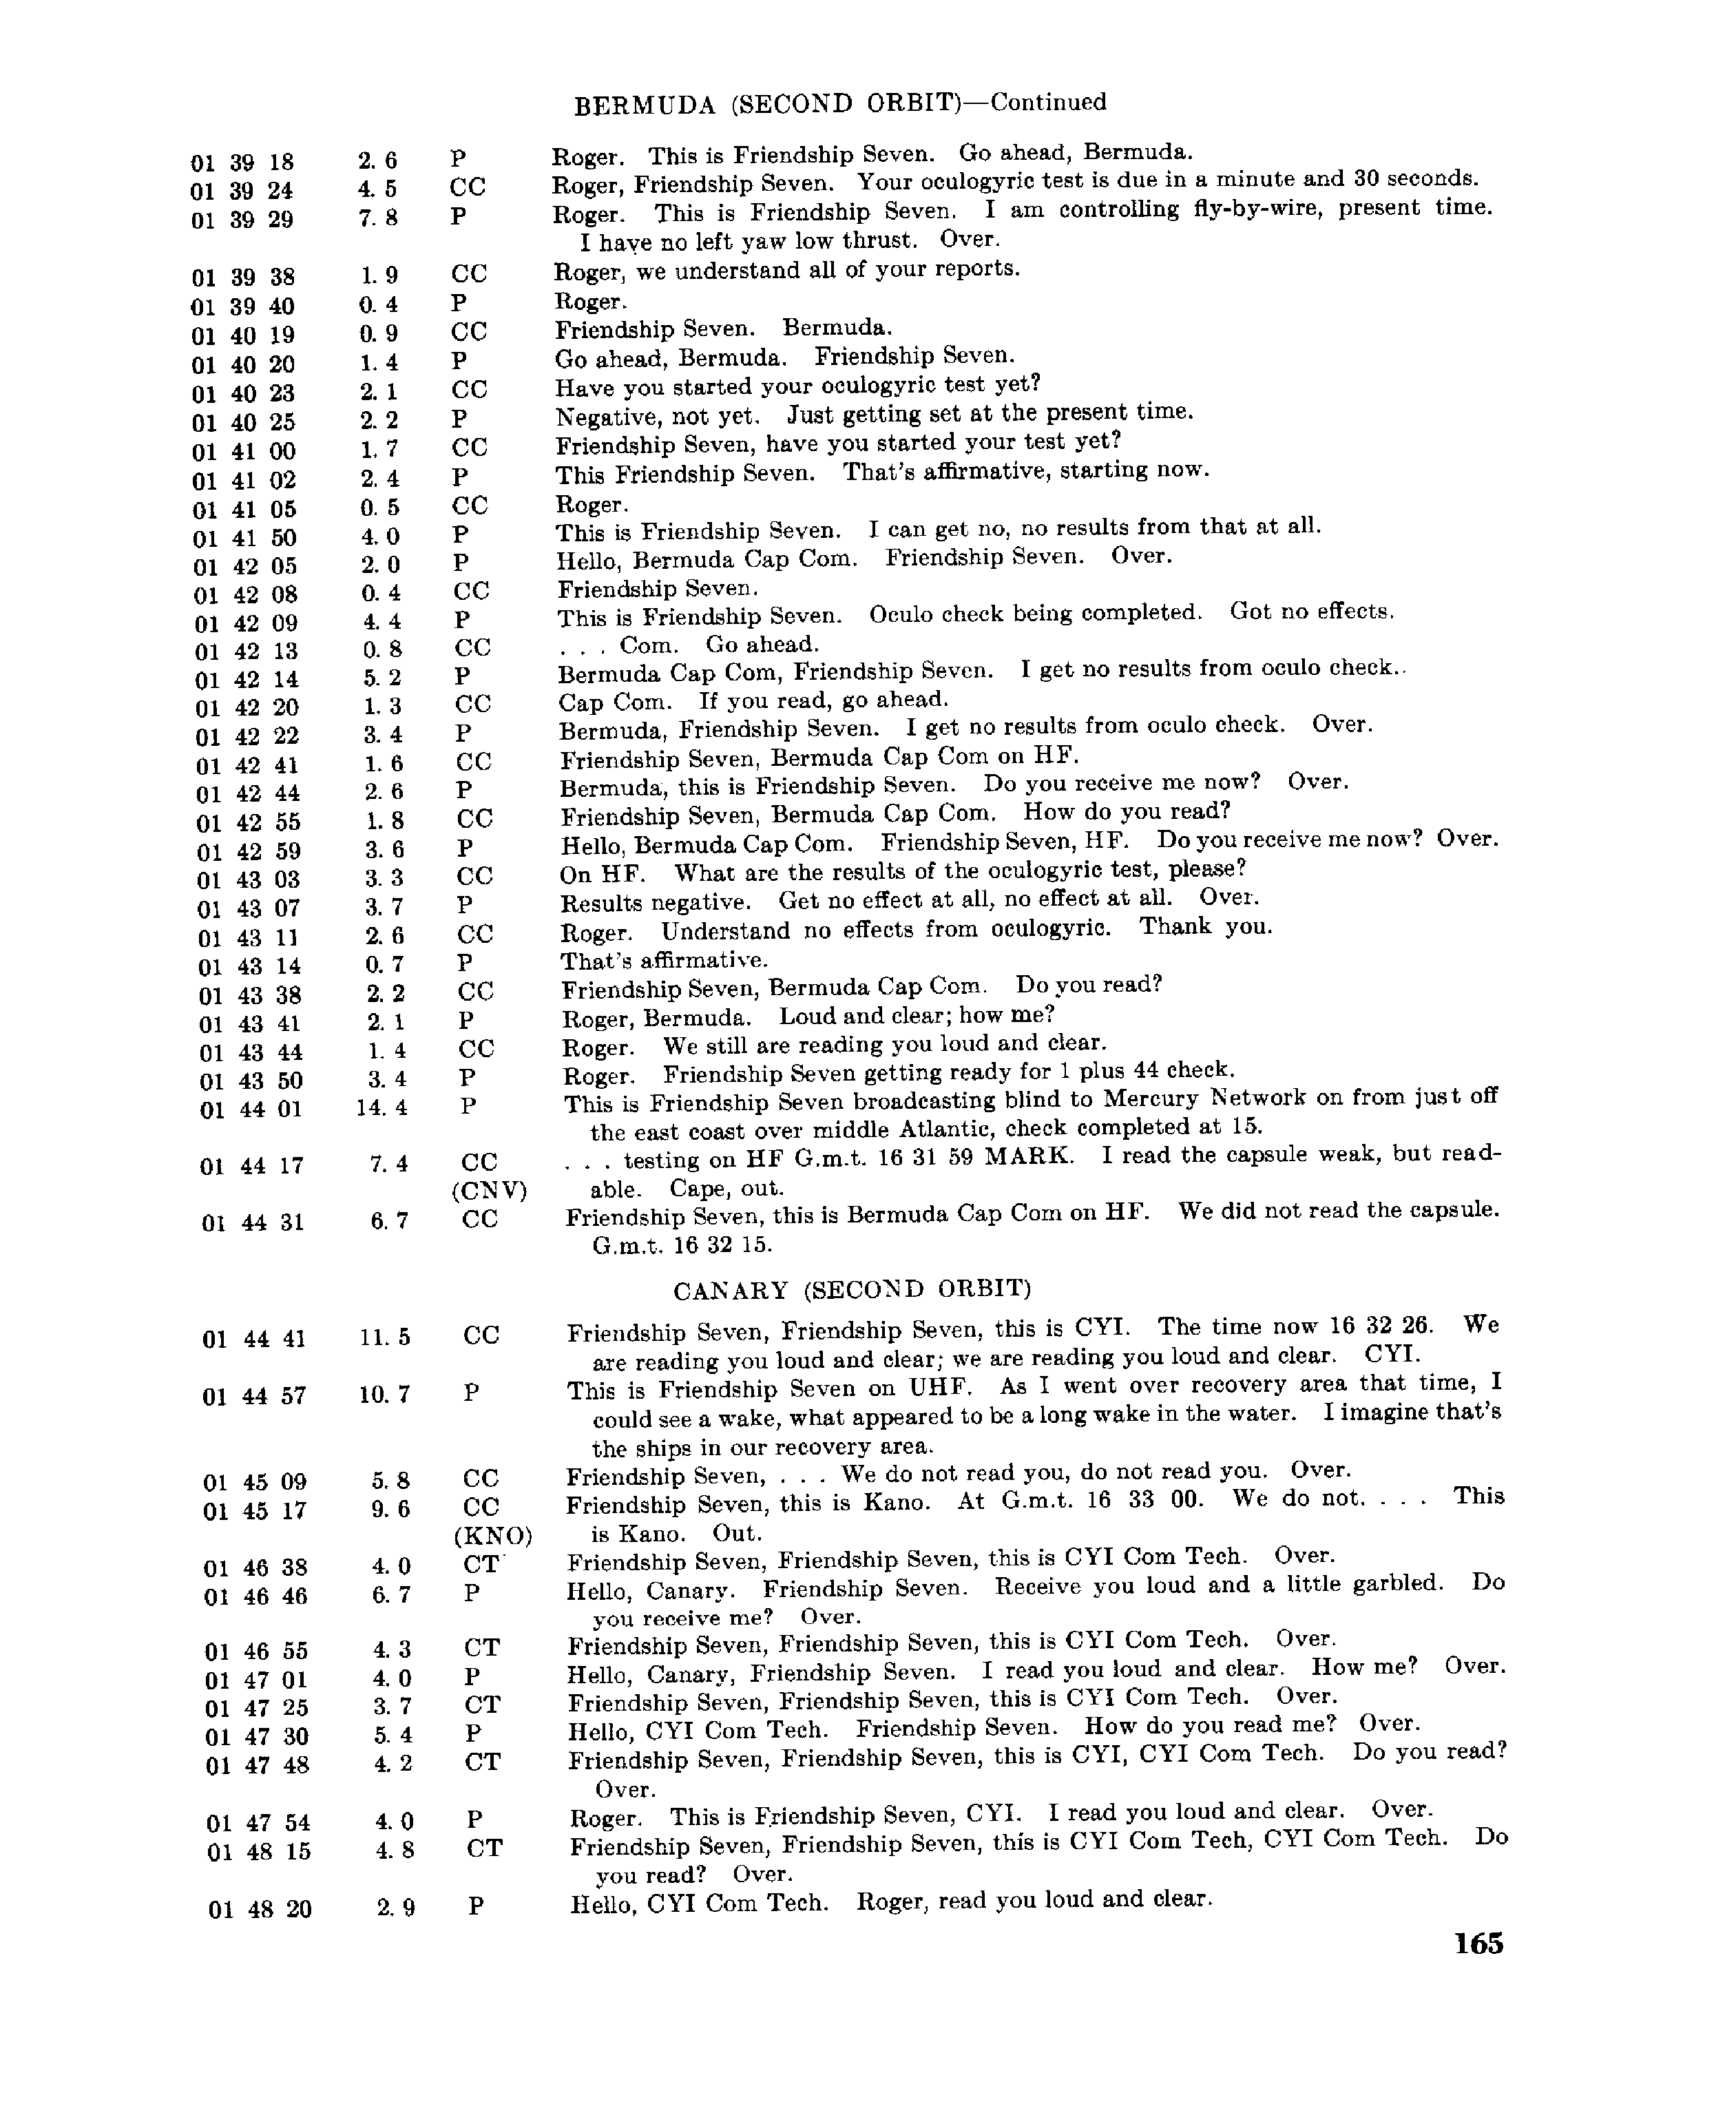 Page 164 of Mercury 6’s original transcript